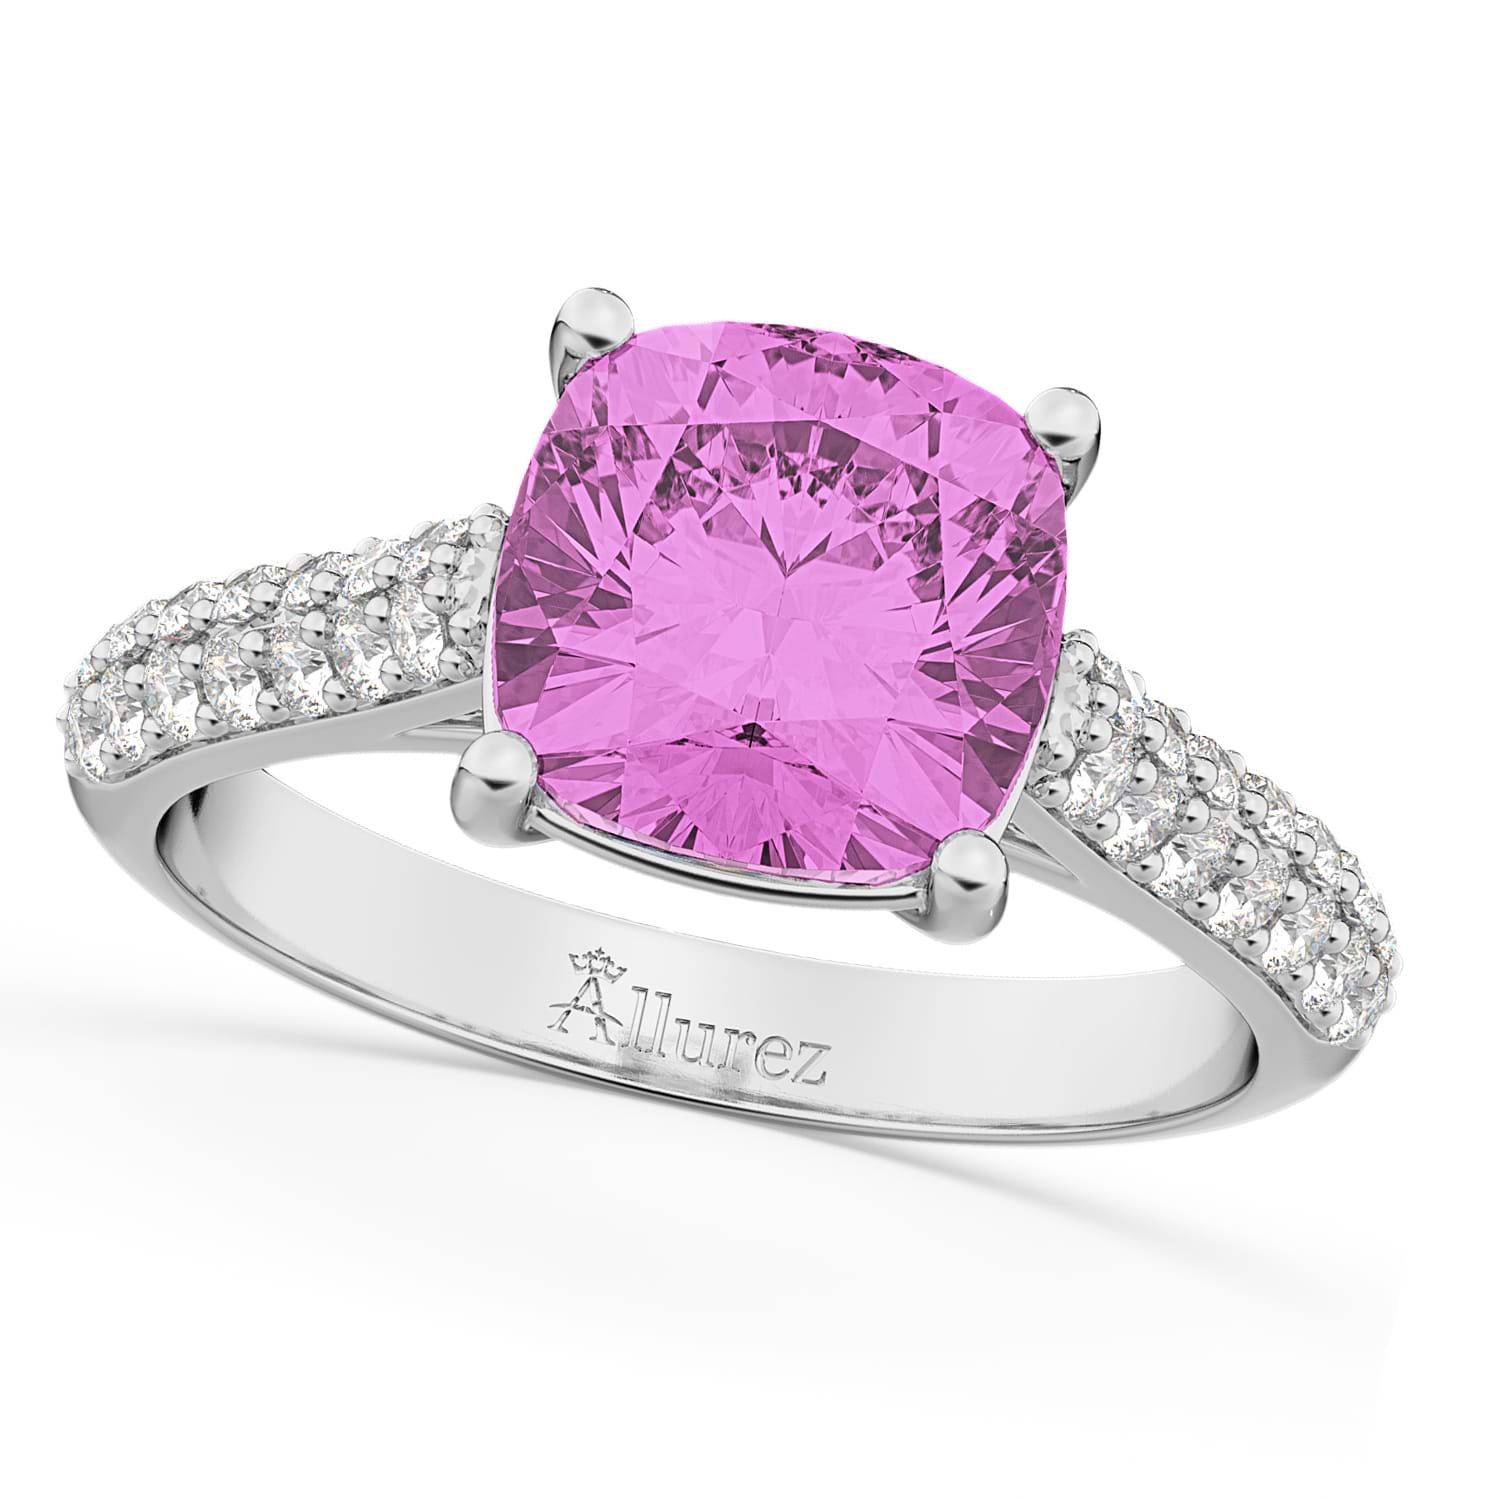 Cushion Cut Pink Sapphire & Diamond Ring 18k White Gold (4.42ct)